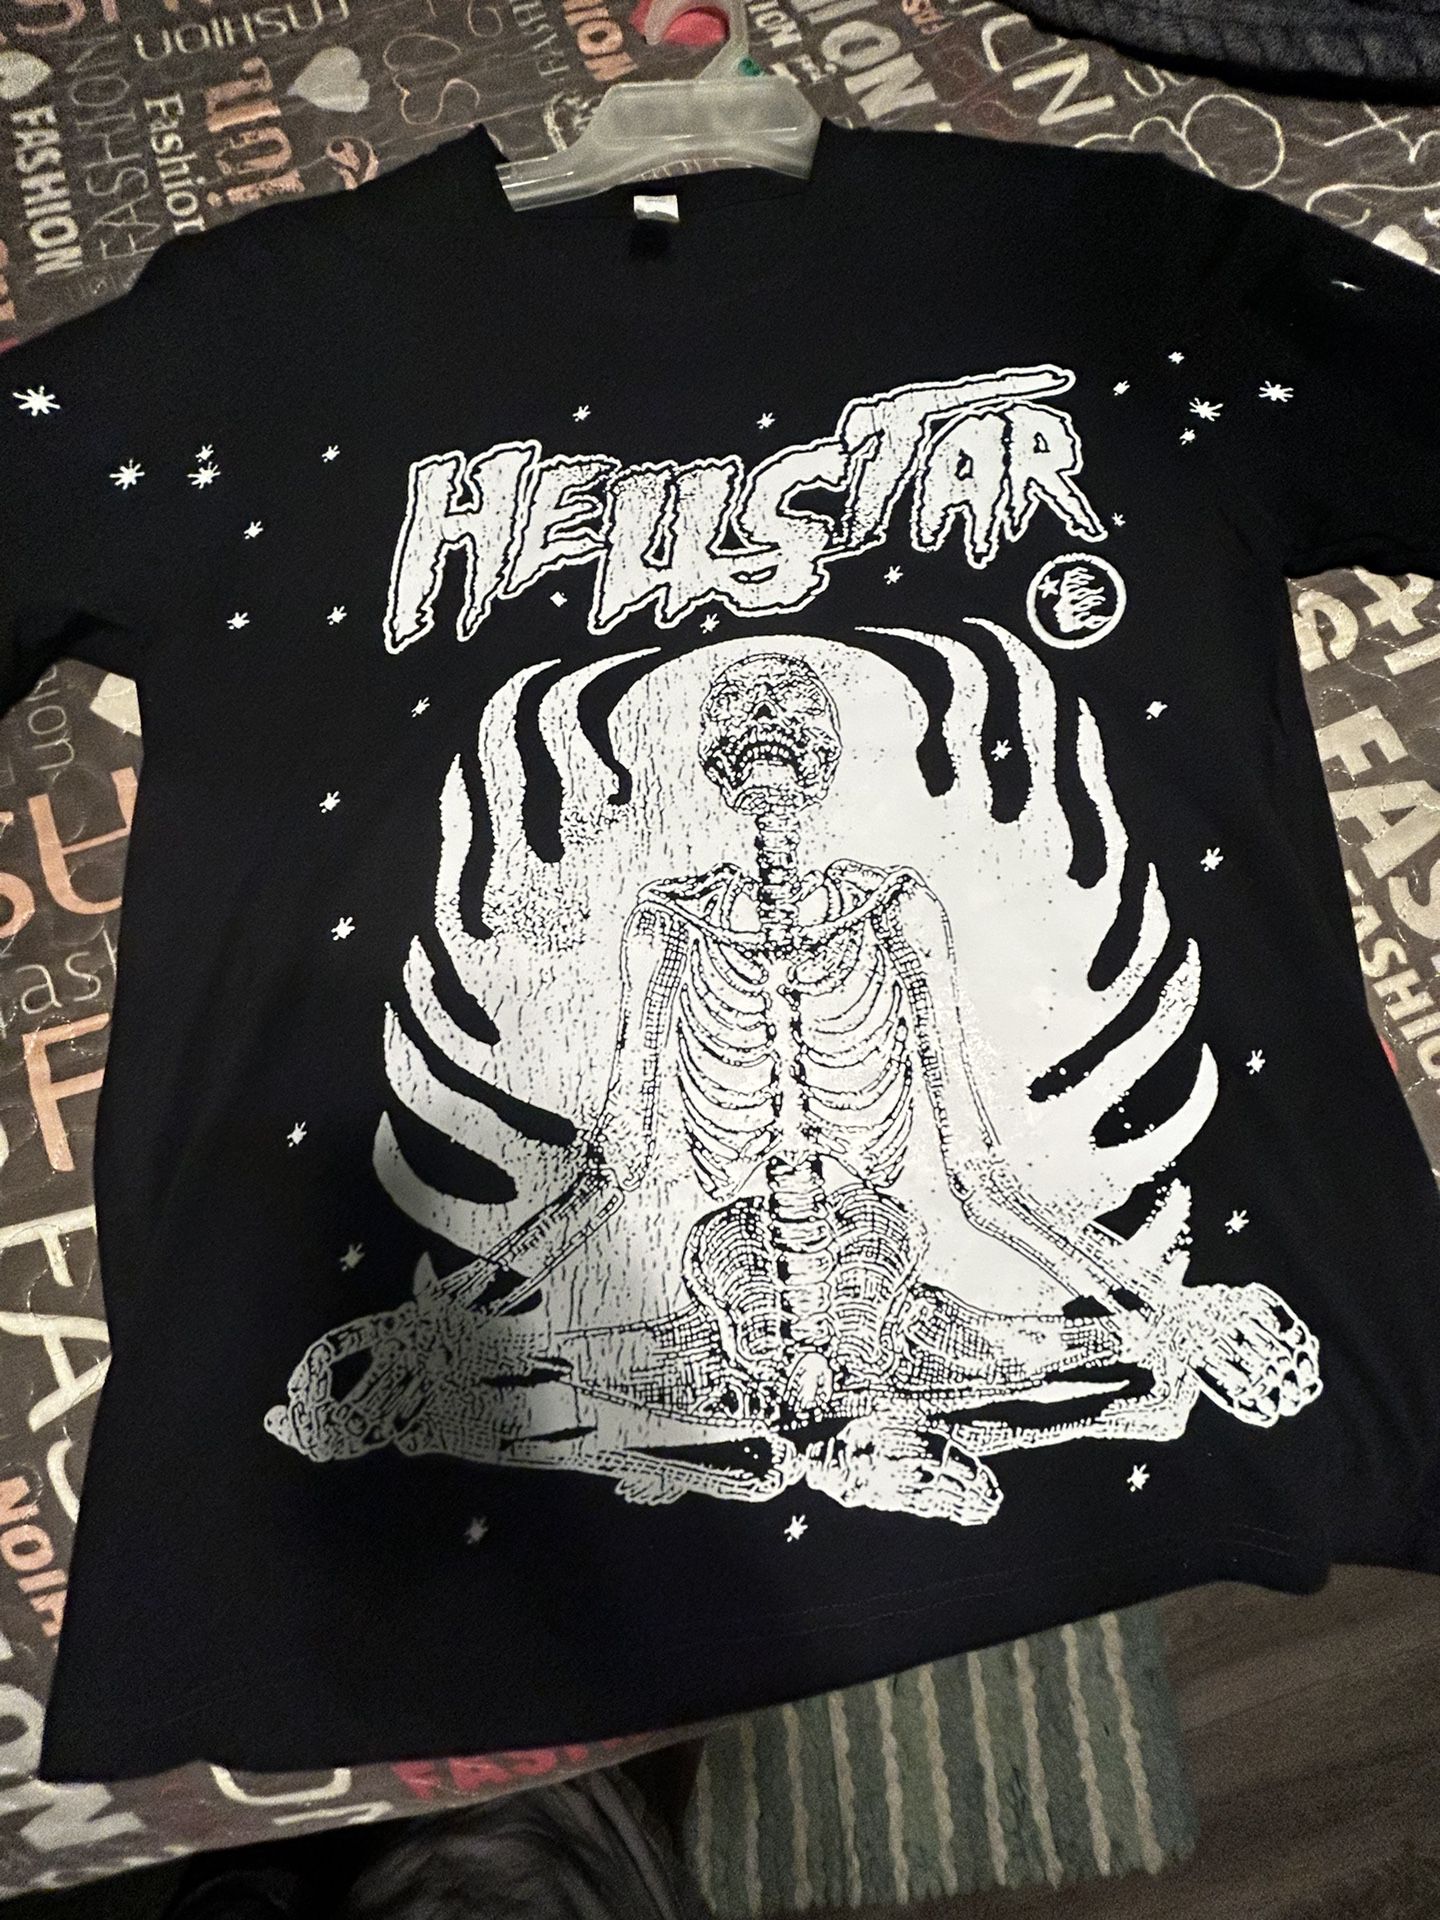 hellstar shirt